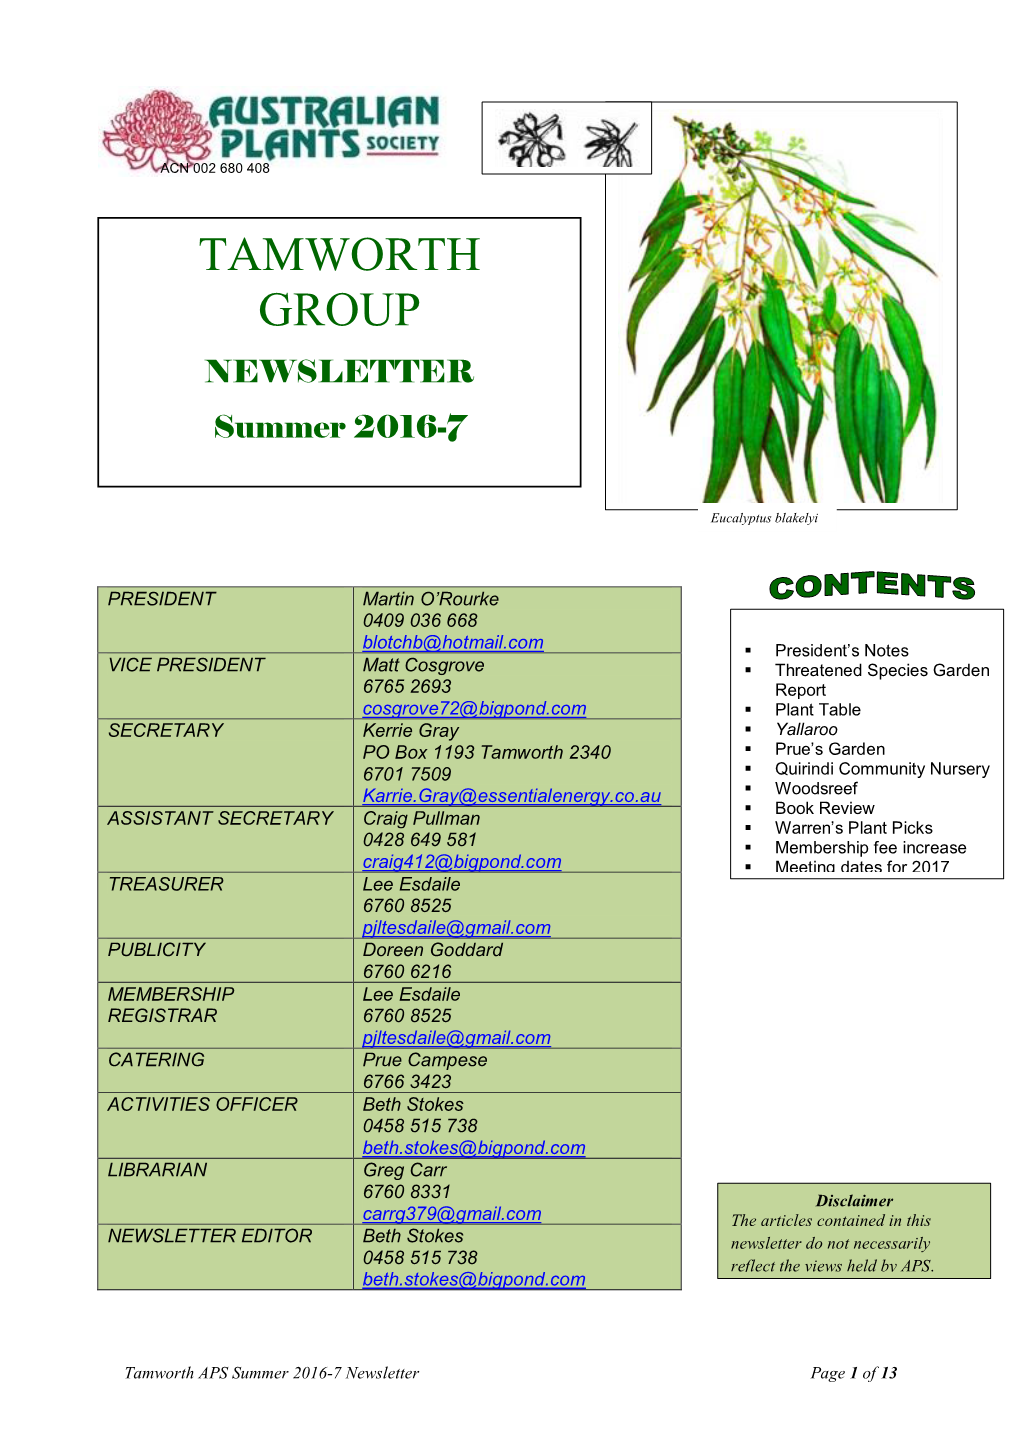 TAMWORTH GROUP NEWSLETTER Summer 2016-7